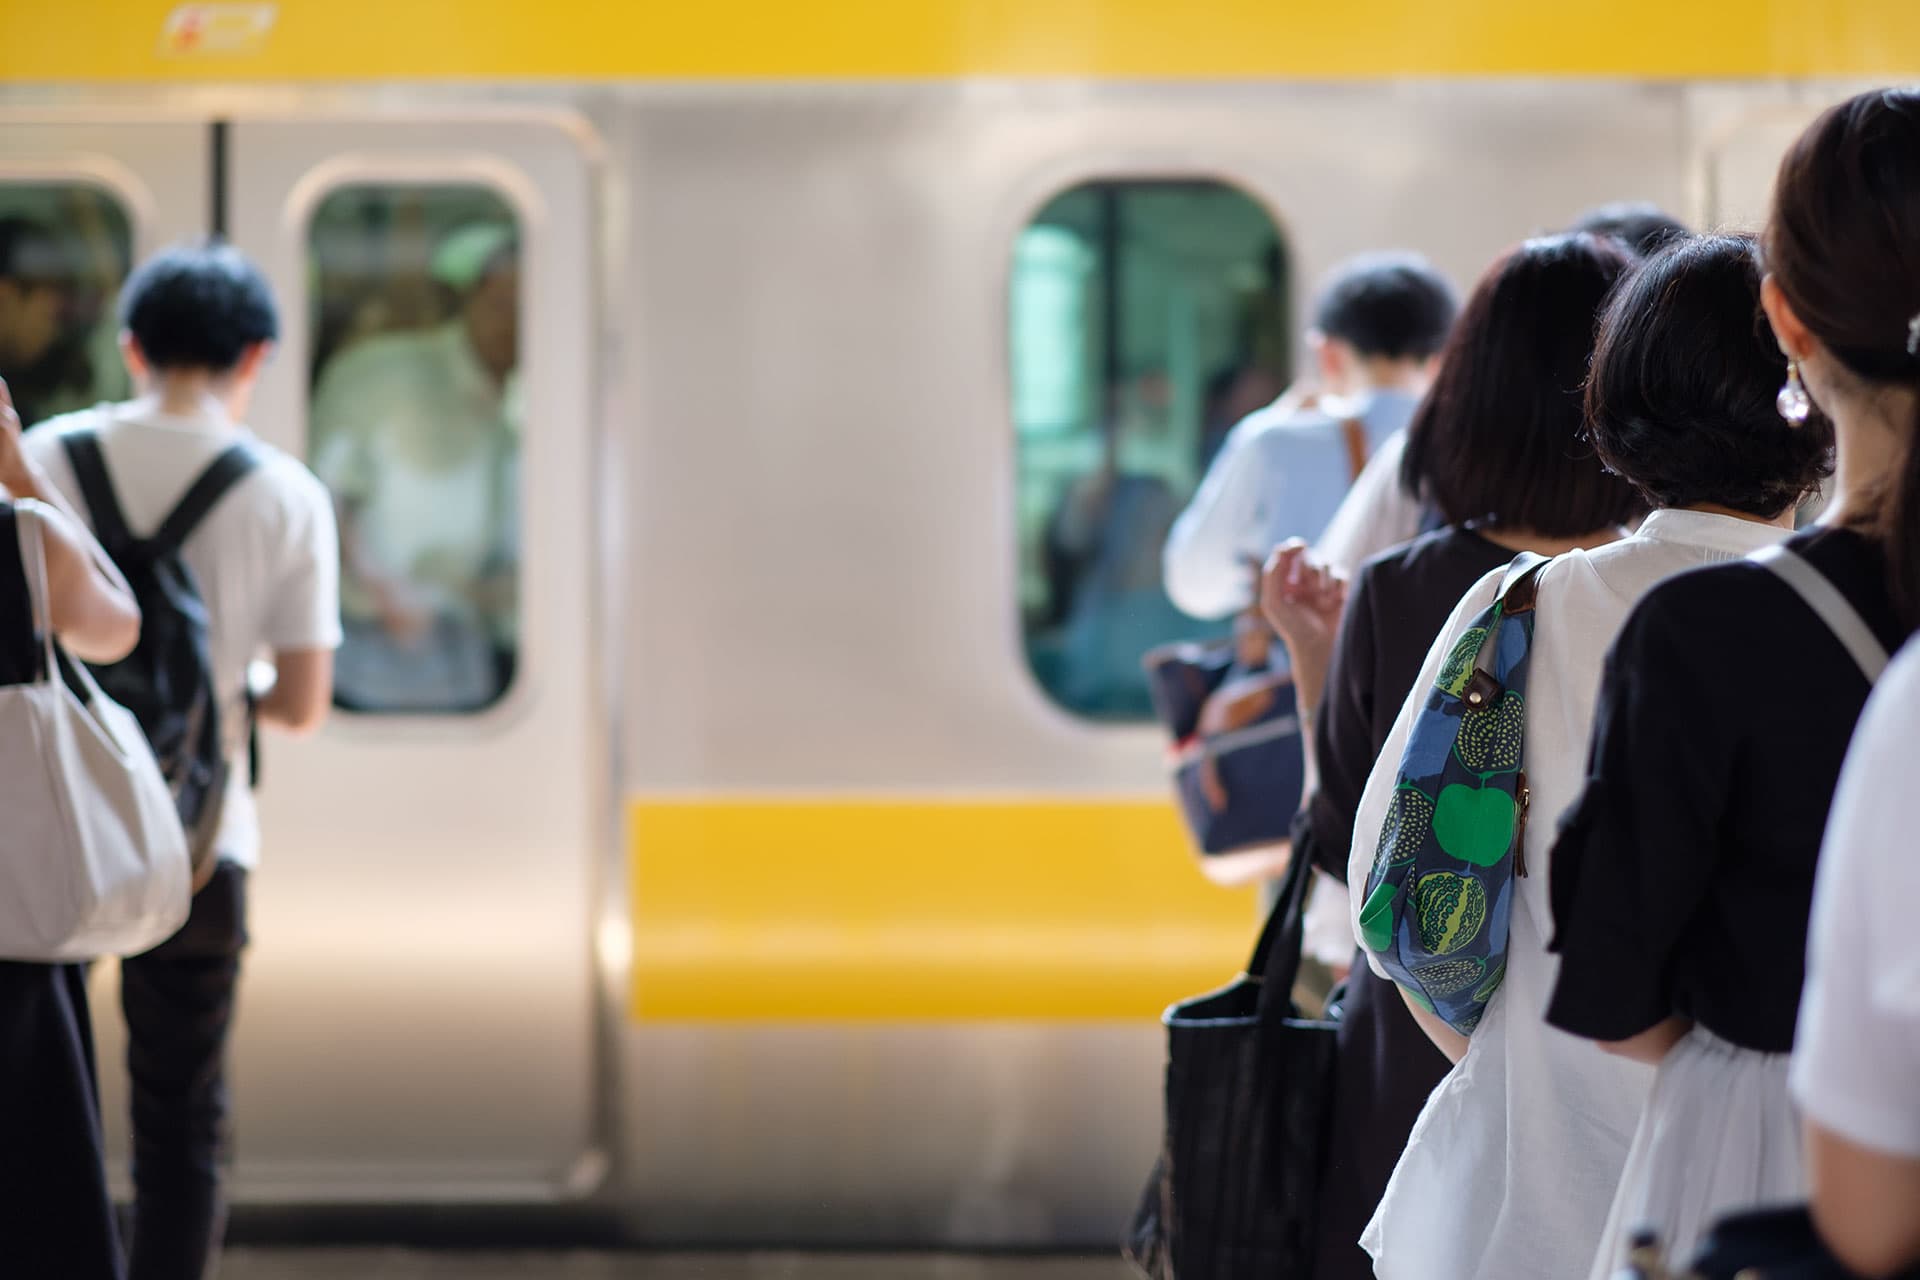 Chuo Shinkansen: the new bullet train in Japan - We Build Value